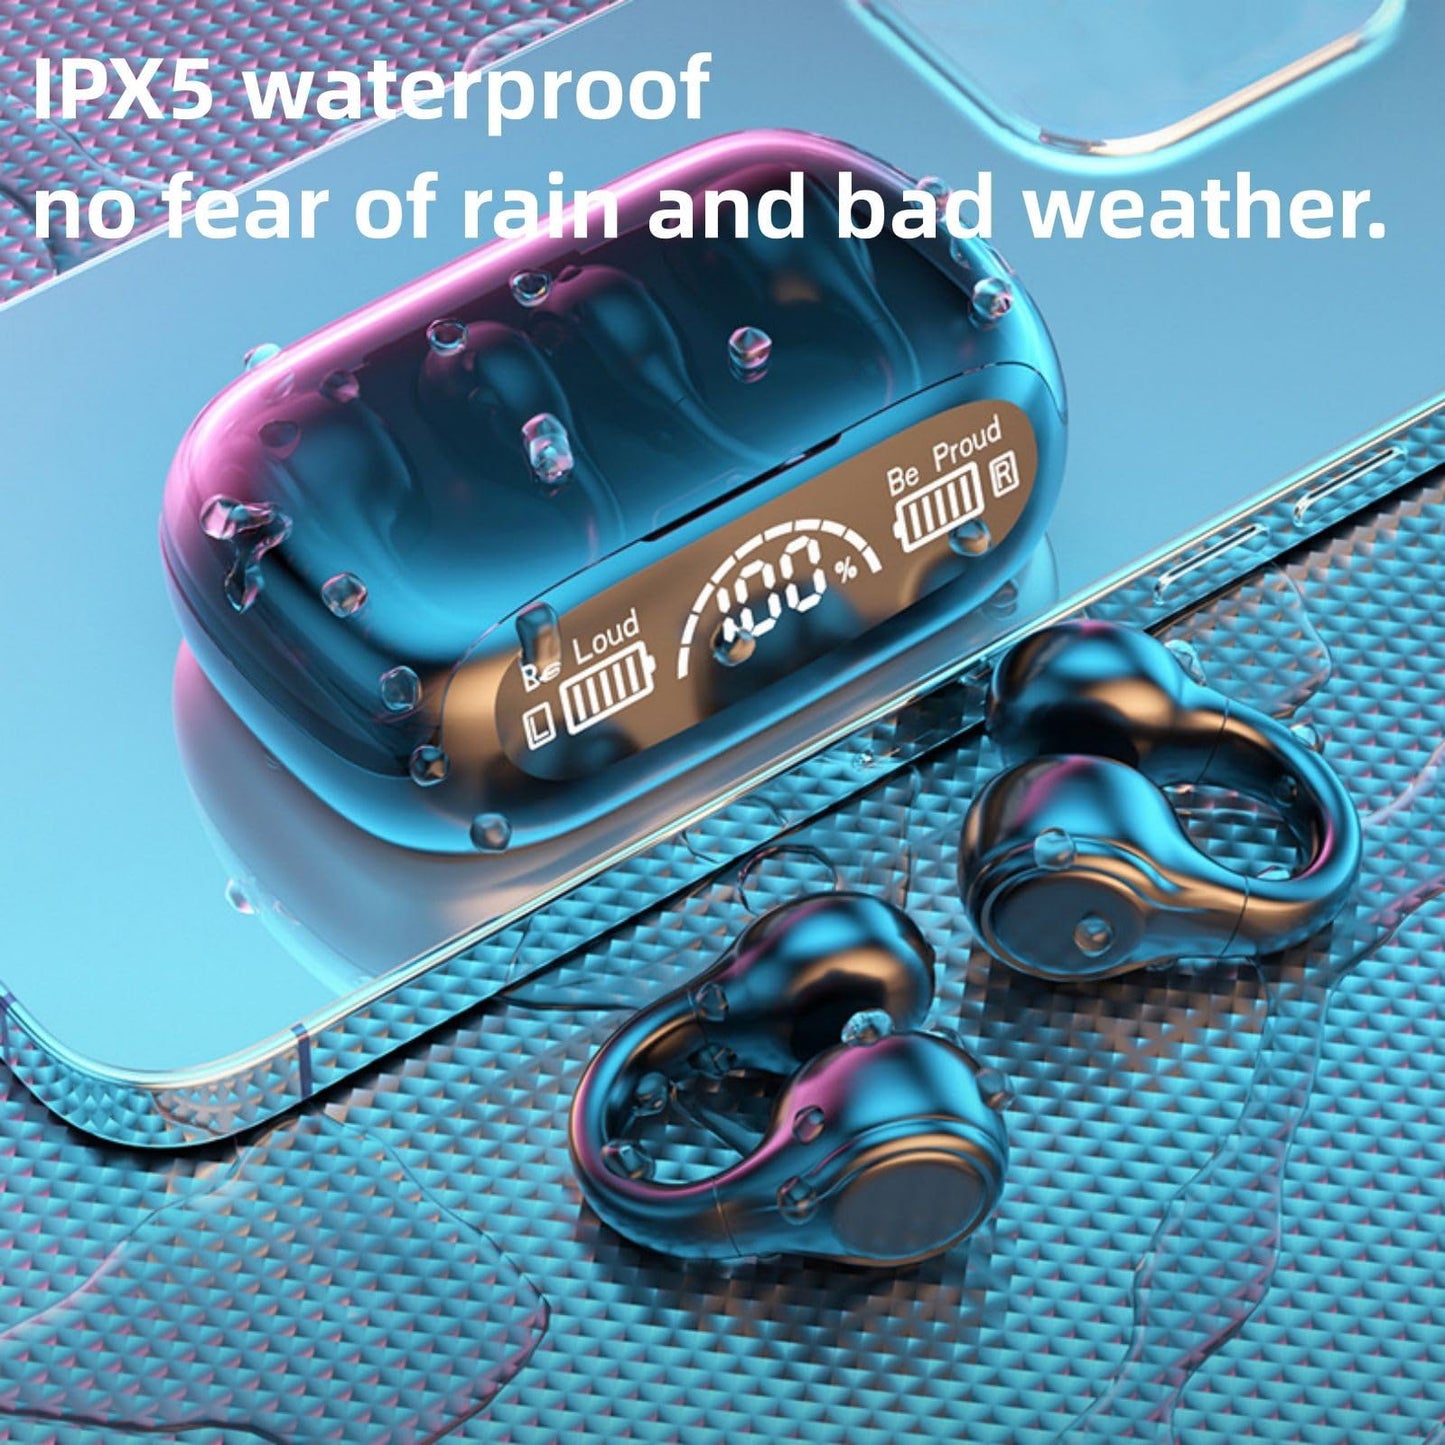 Wireless Open Ear Headphone - Soft & Comfortable Earphones - Ear Clip Conduction Headphones - Water Resistance Earbuds - Portable Earphones Ideal for Meeting, Running, Traveling